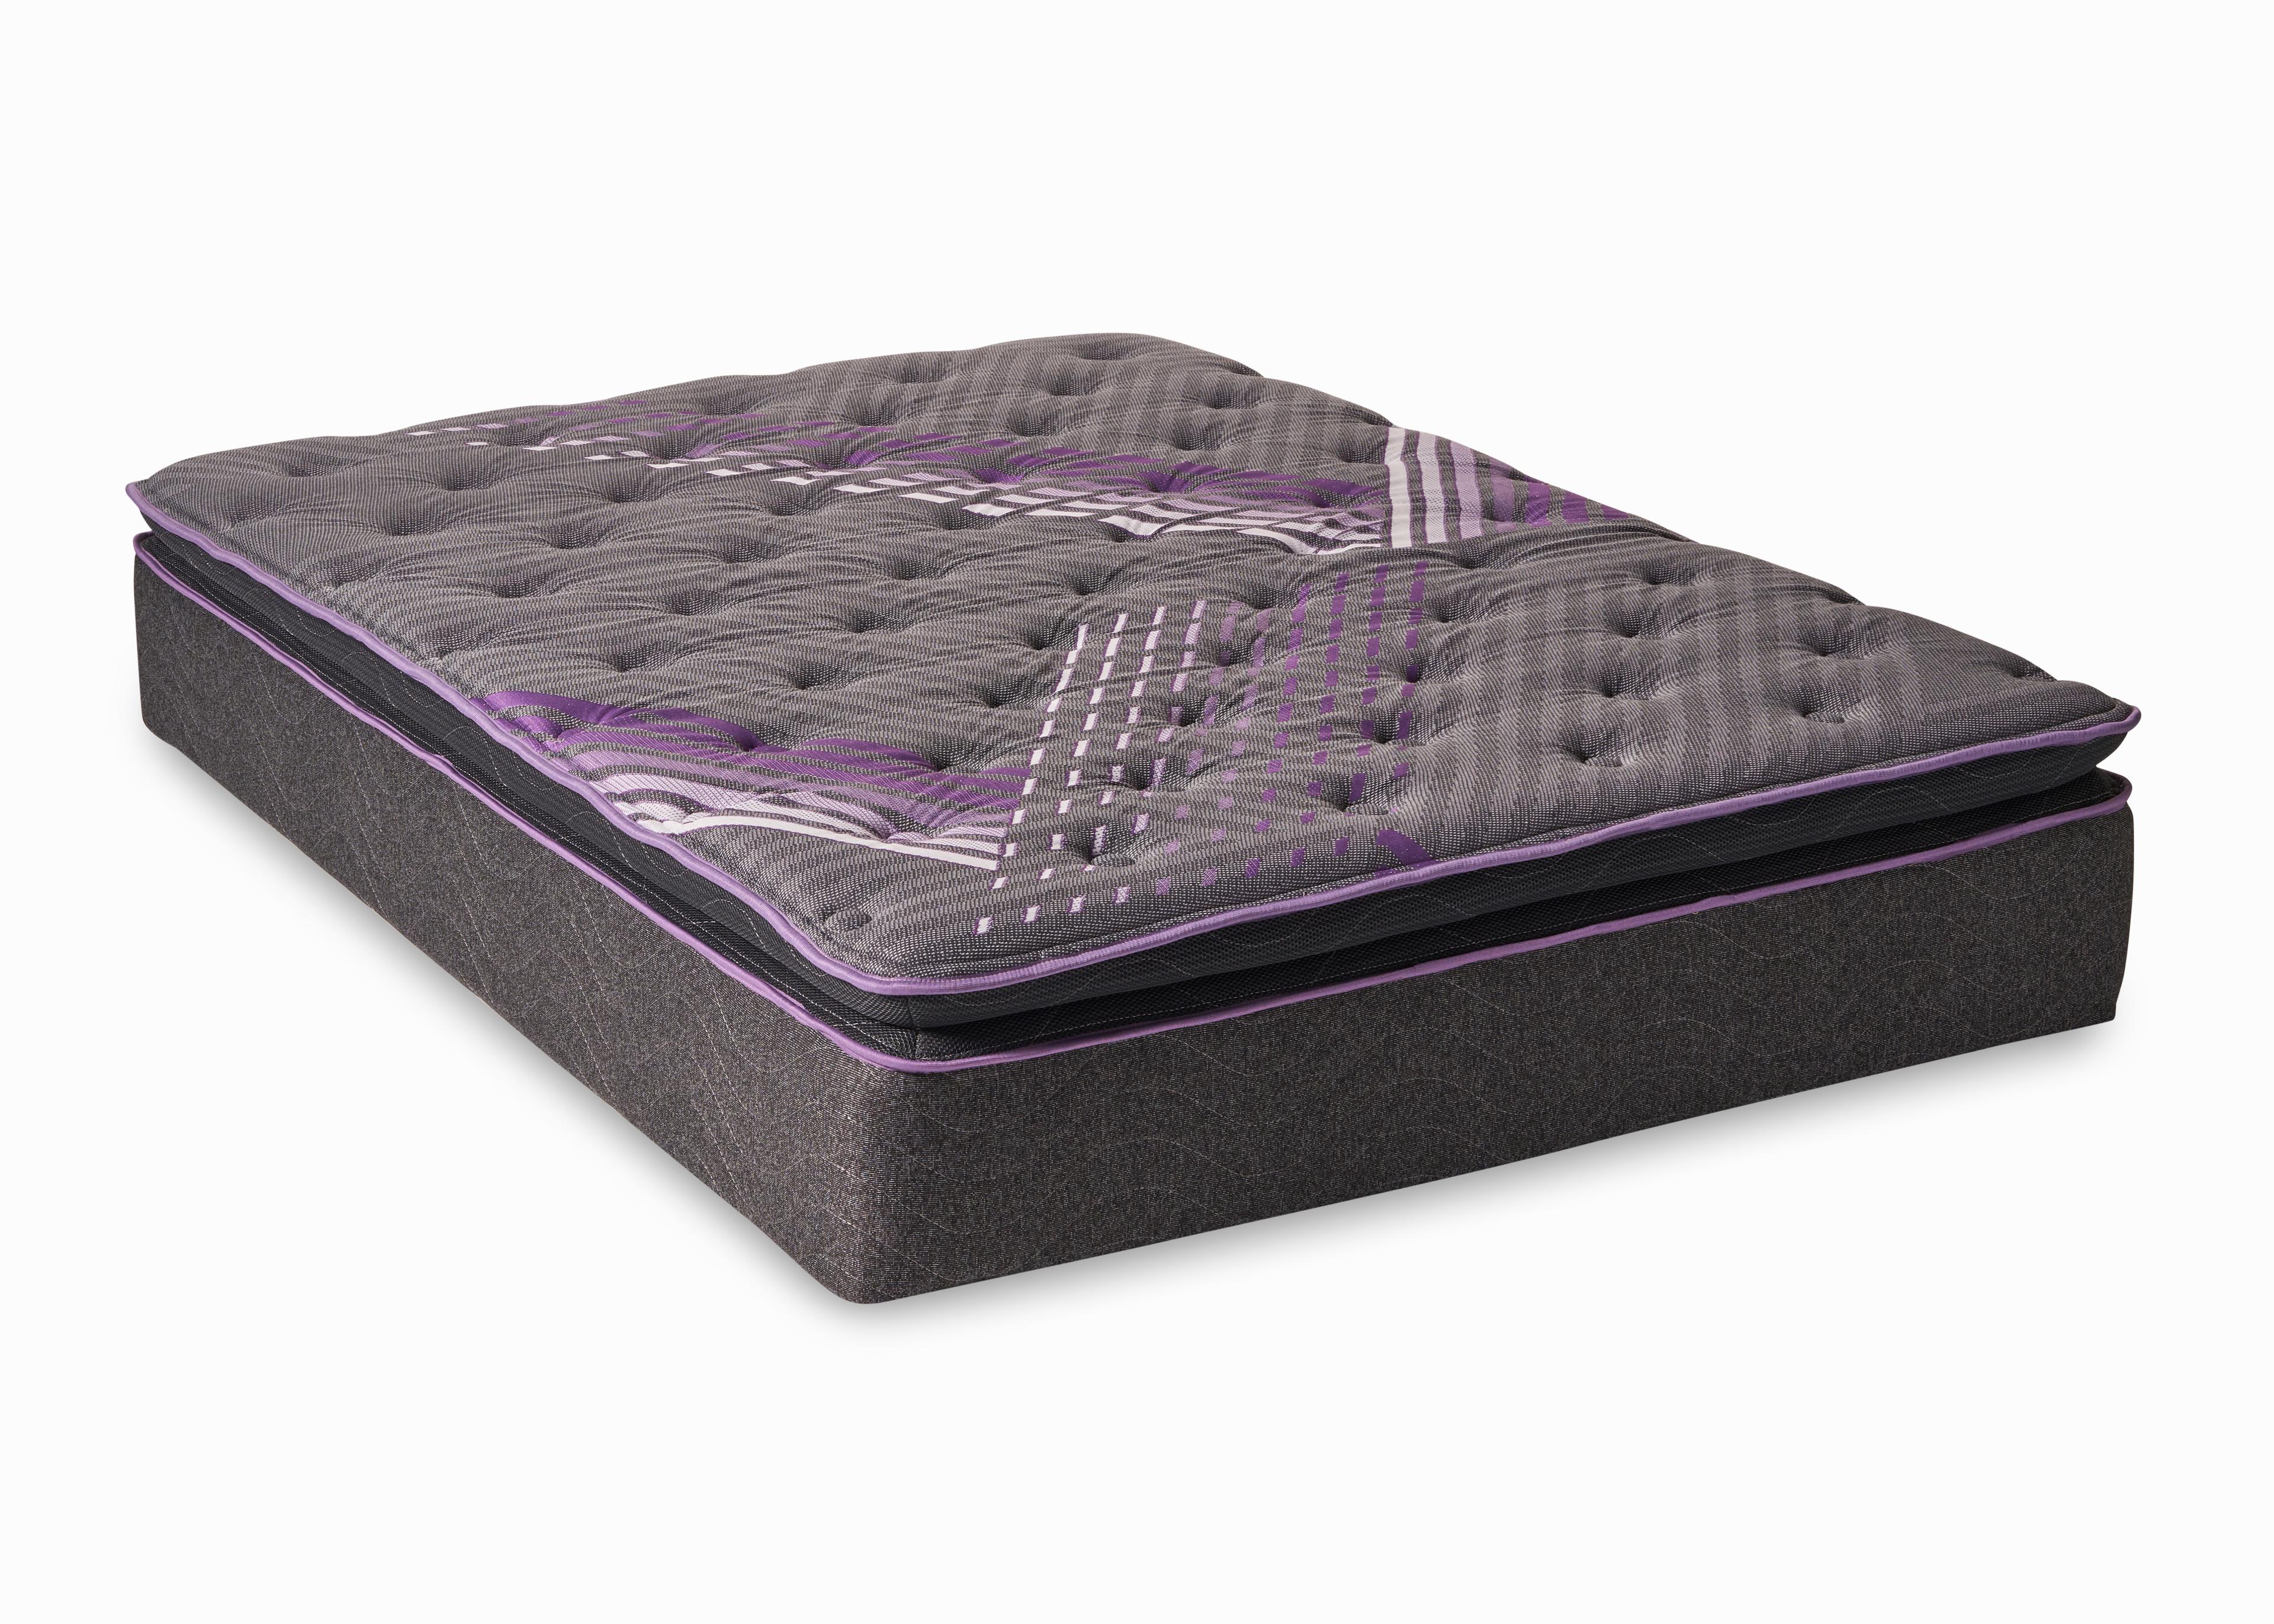 king size 16 jamison resort collection mattress reviews